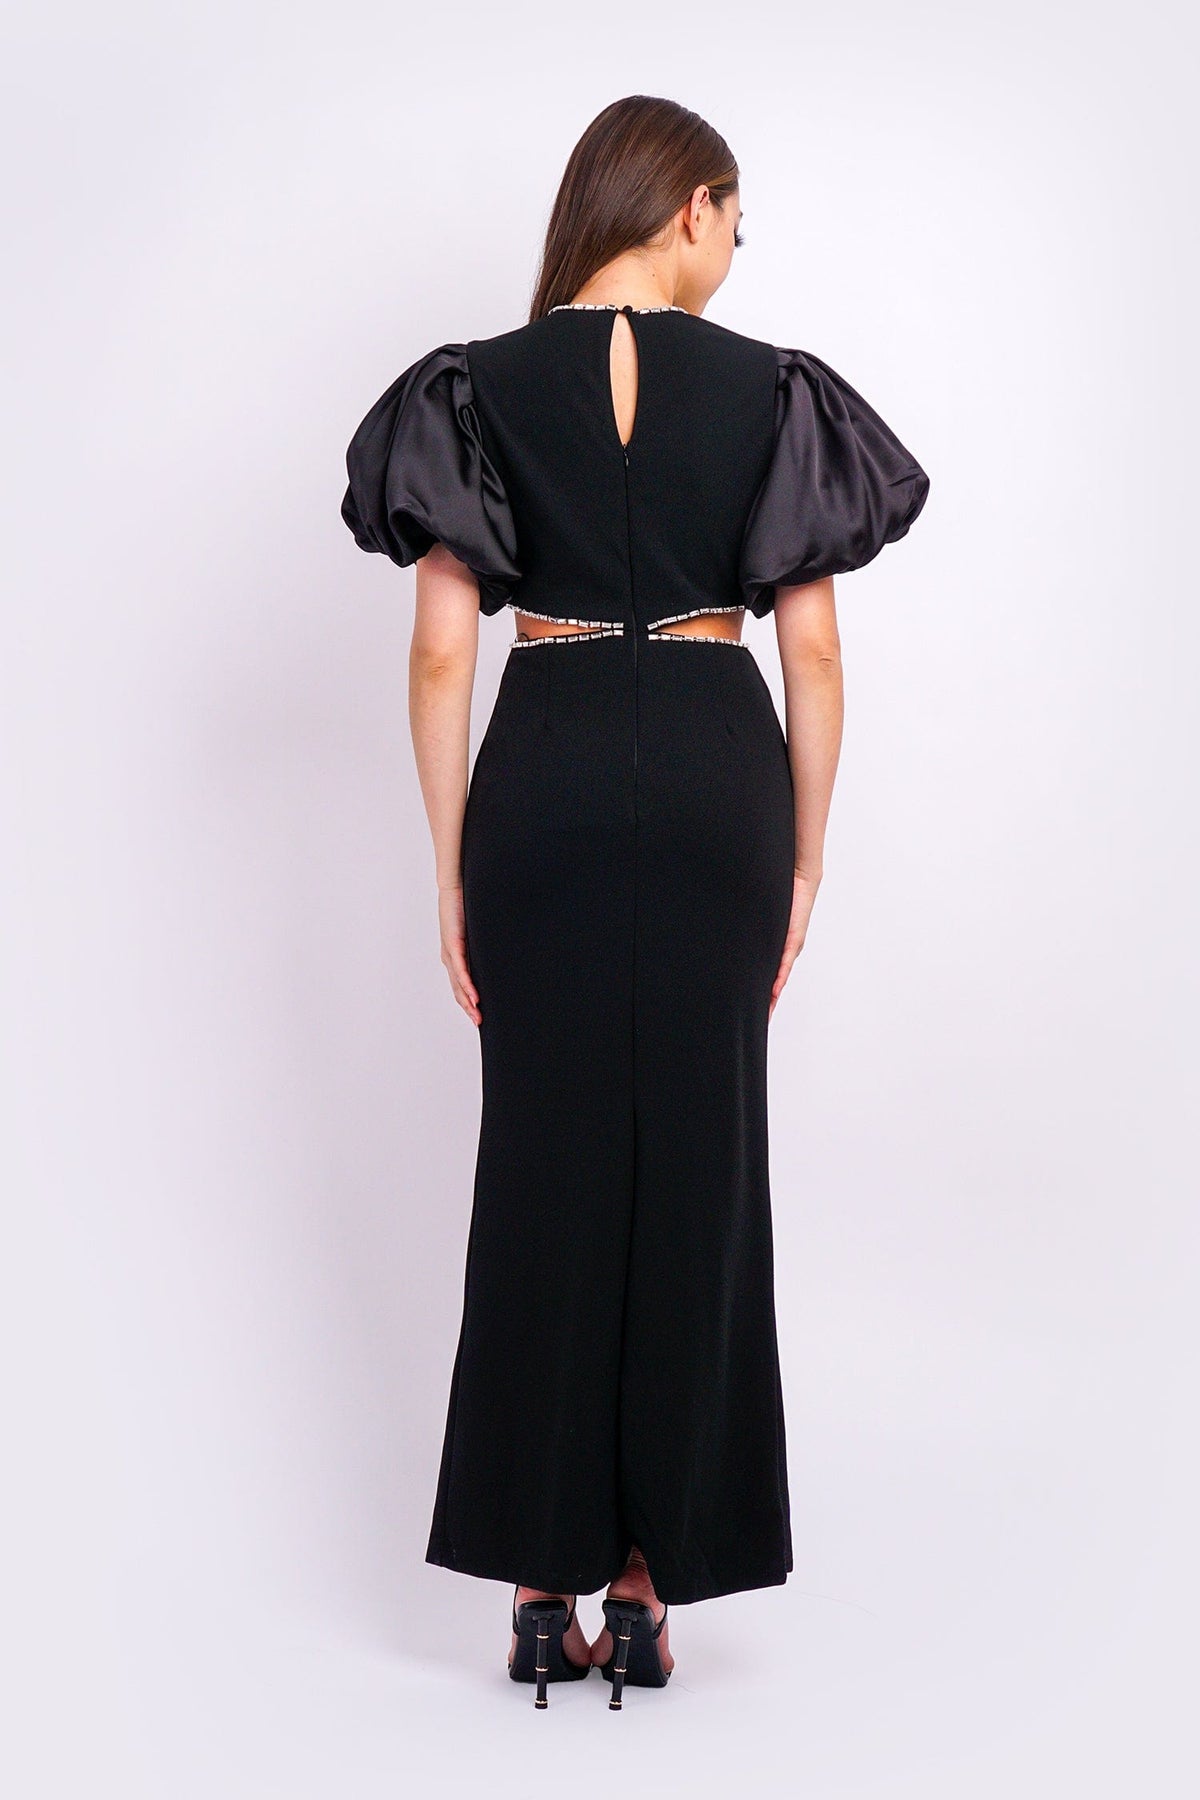 DCD Gowns Black Puff Sleeves Rhinestone Side Cutout Gown